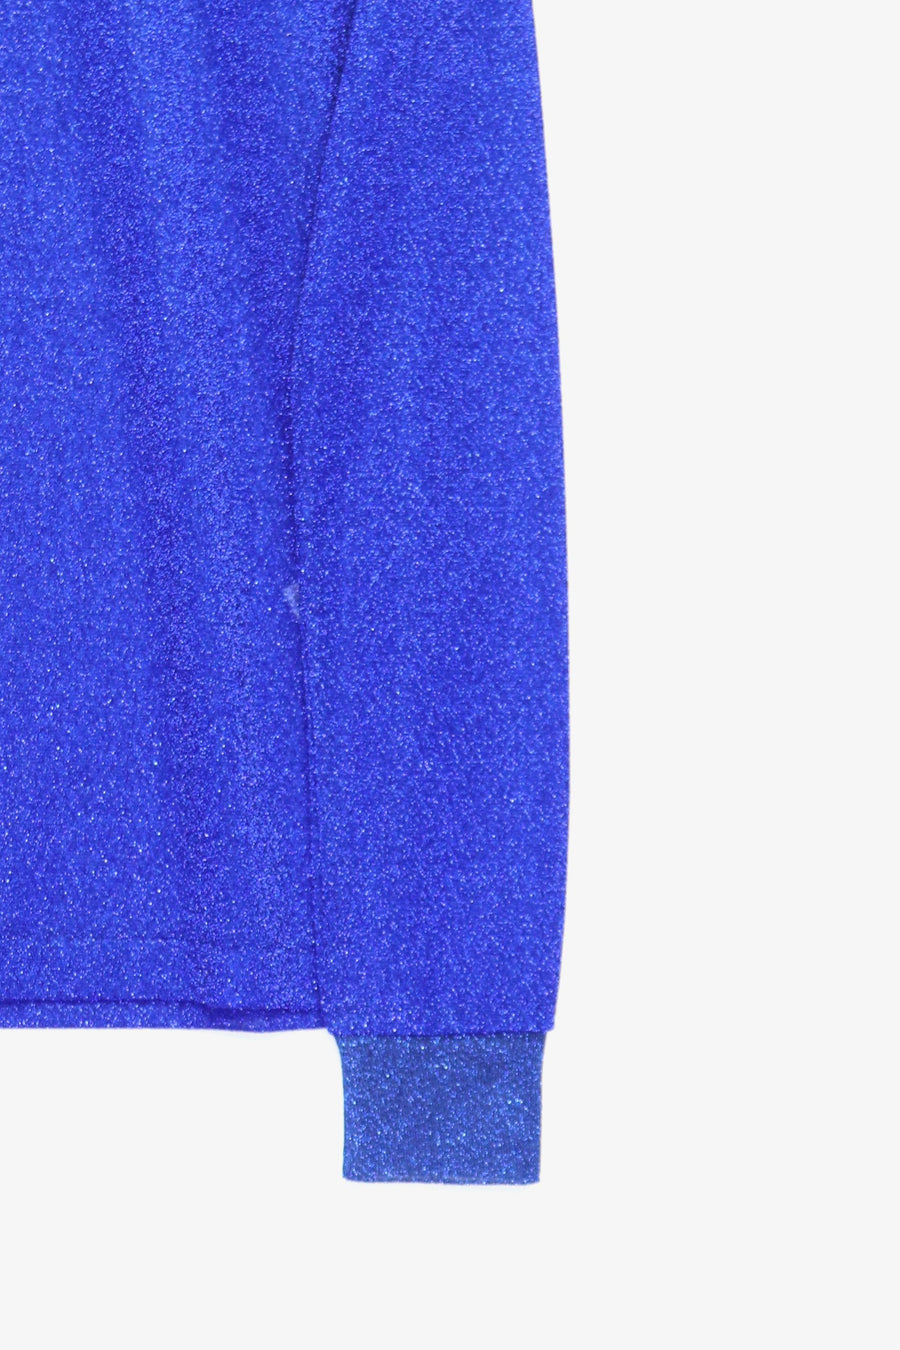 TOGA VIRILIS  Sparkle jersey high neck(BLUE)